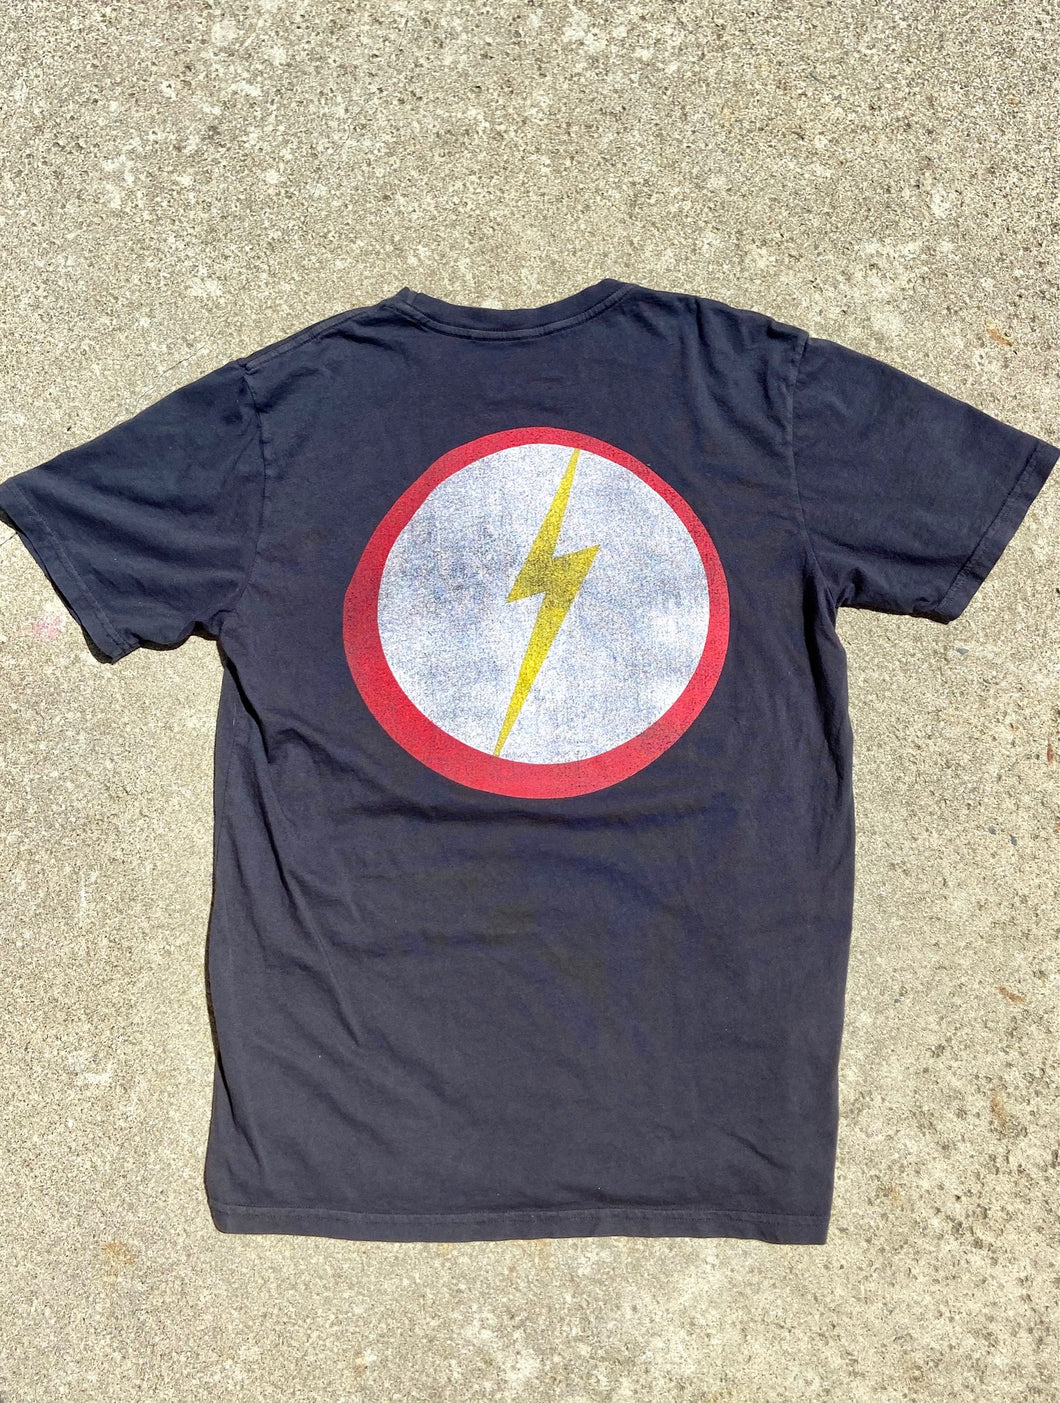 Vintage Black Lightning Bolt tshirt, Circle 